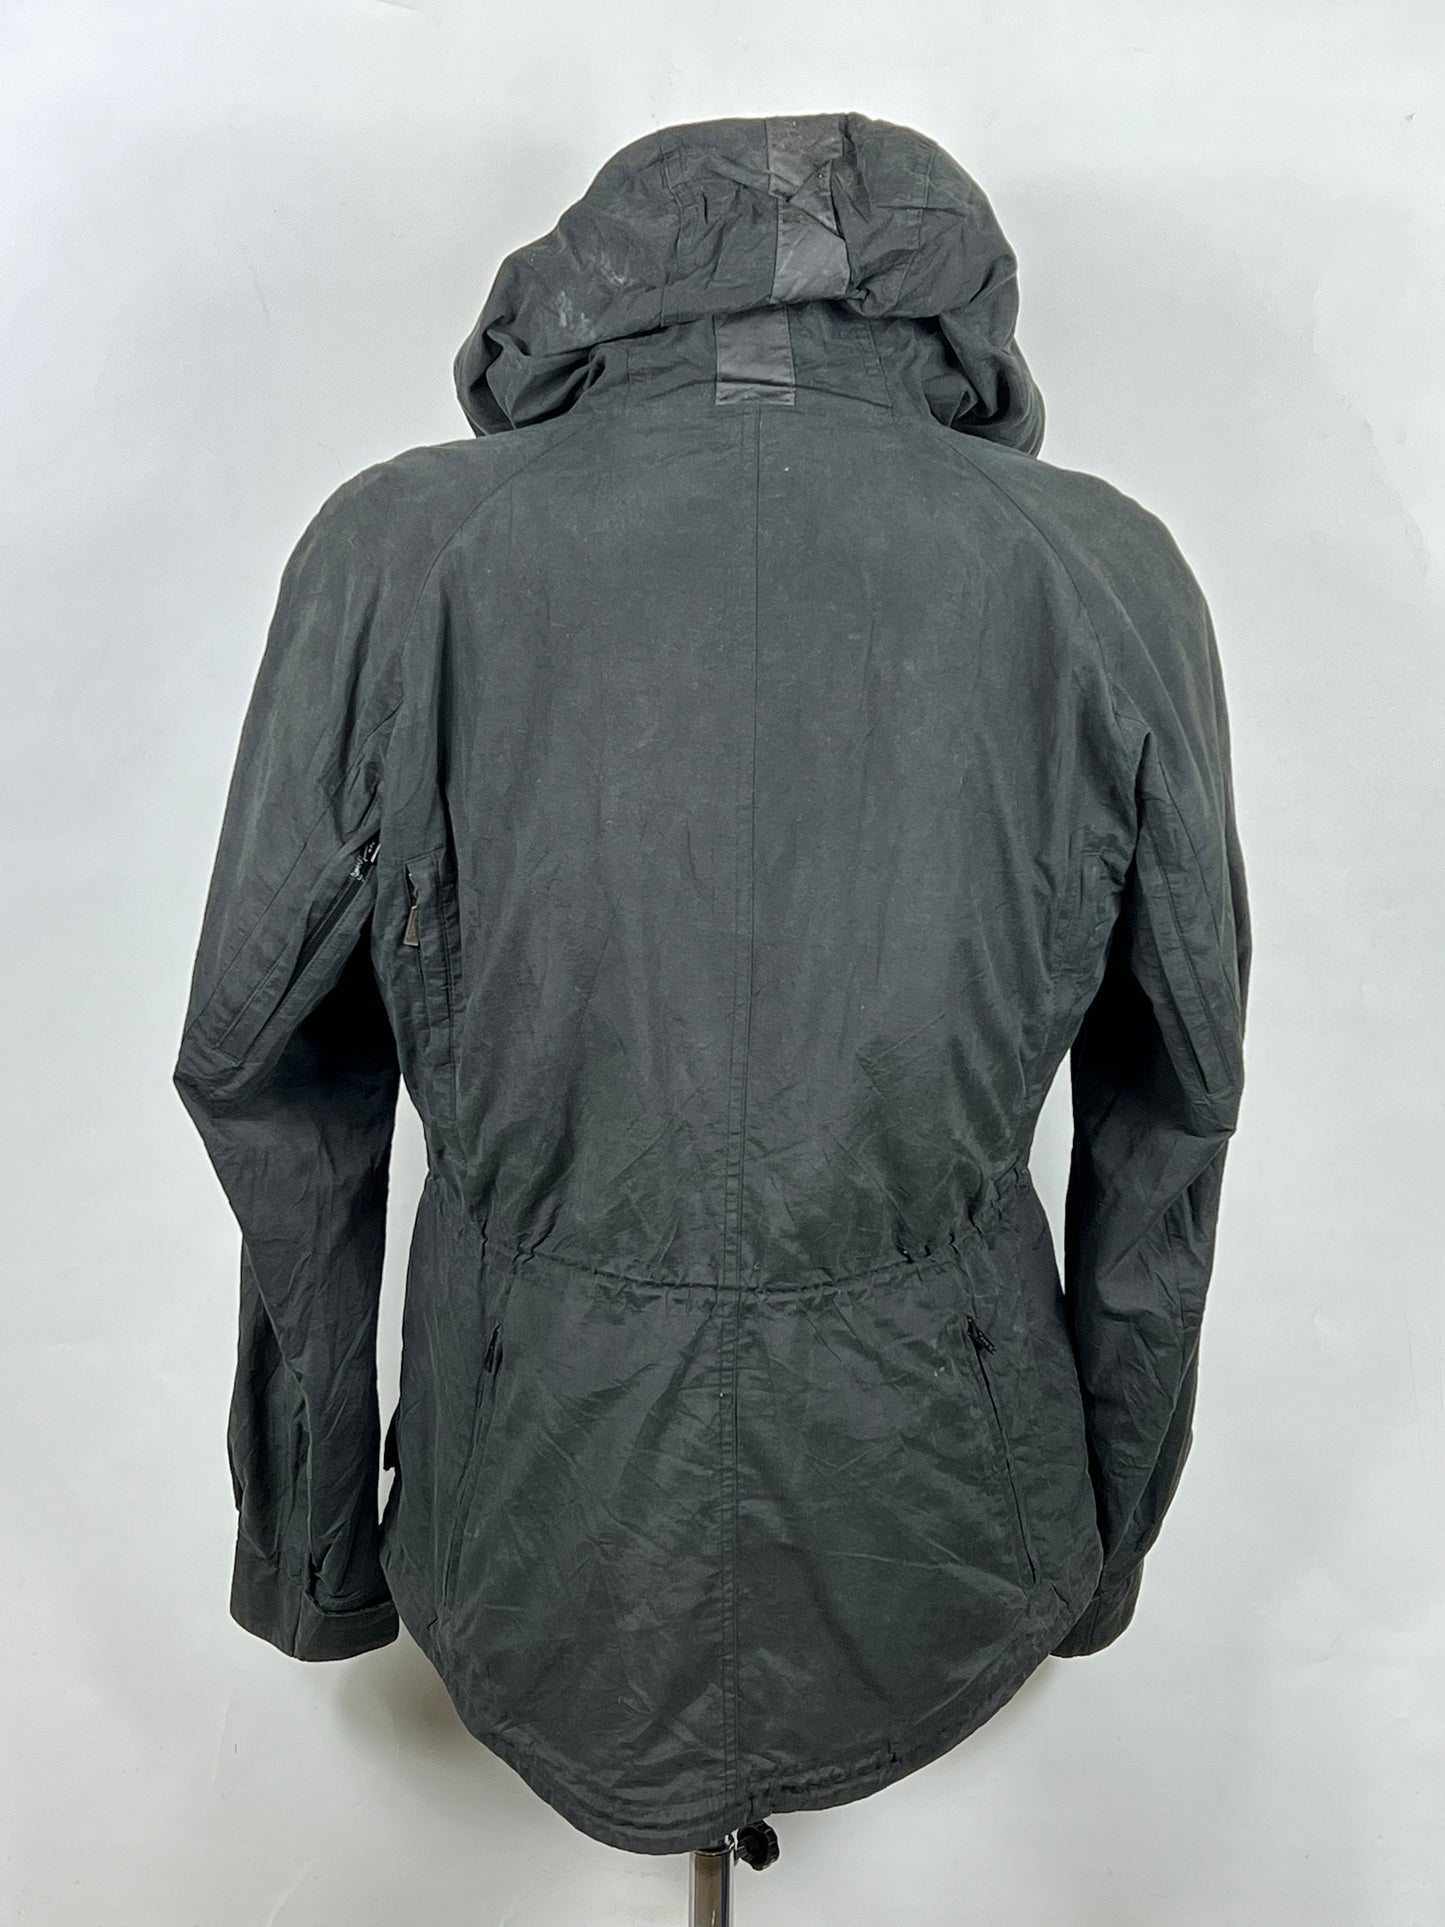 Giacca Barbour Dept B nera Galbi wax jacket Medium-Black Dept B wax jacket size M